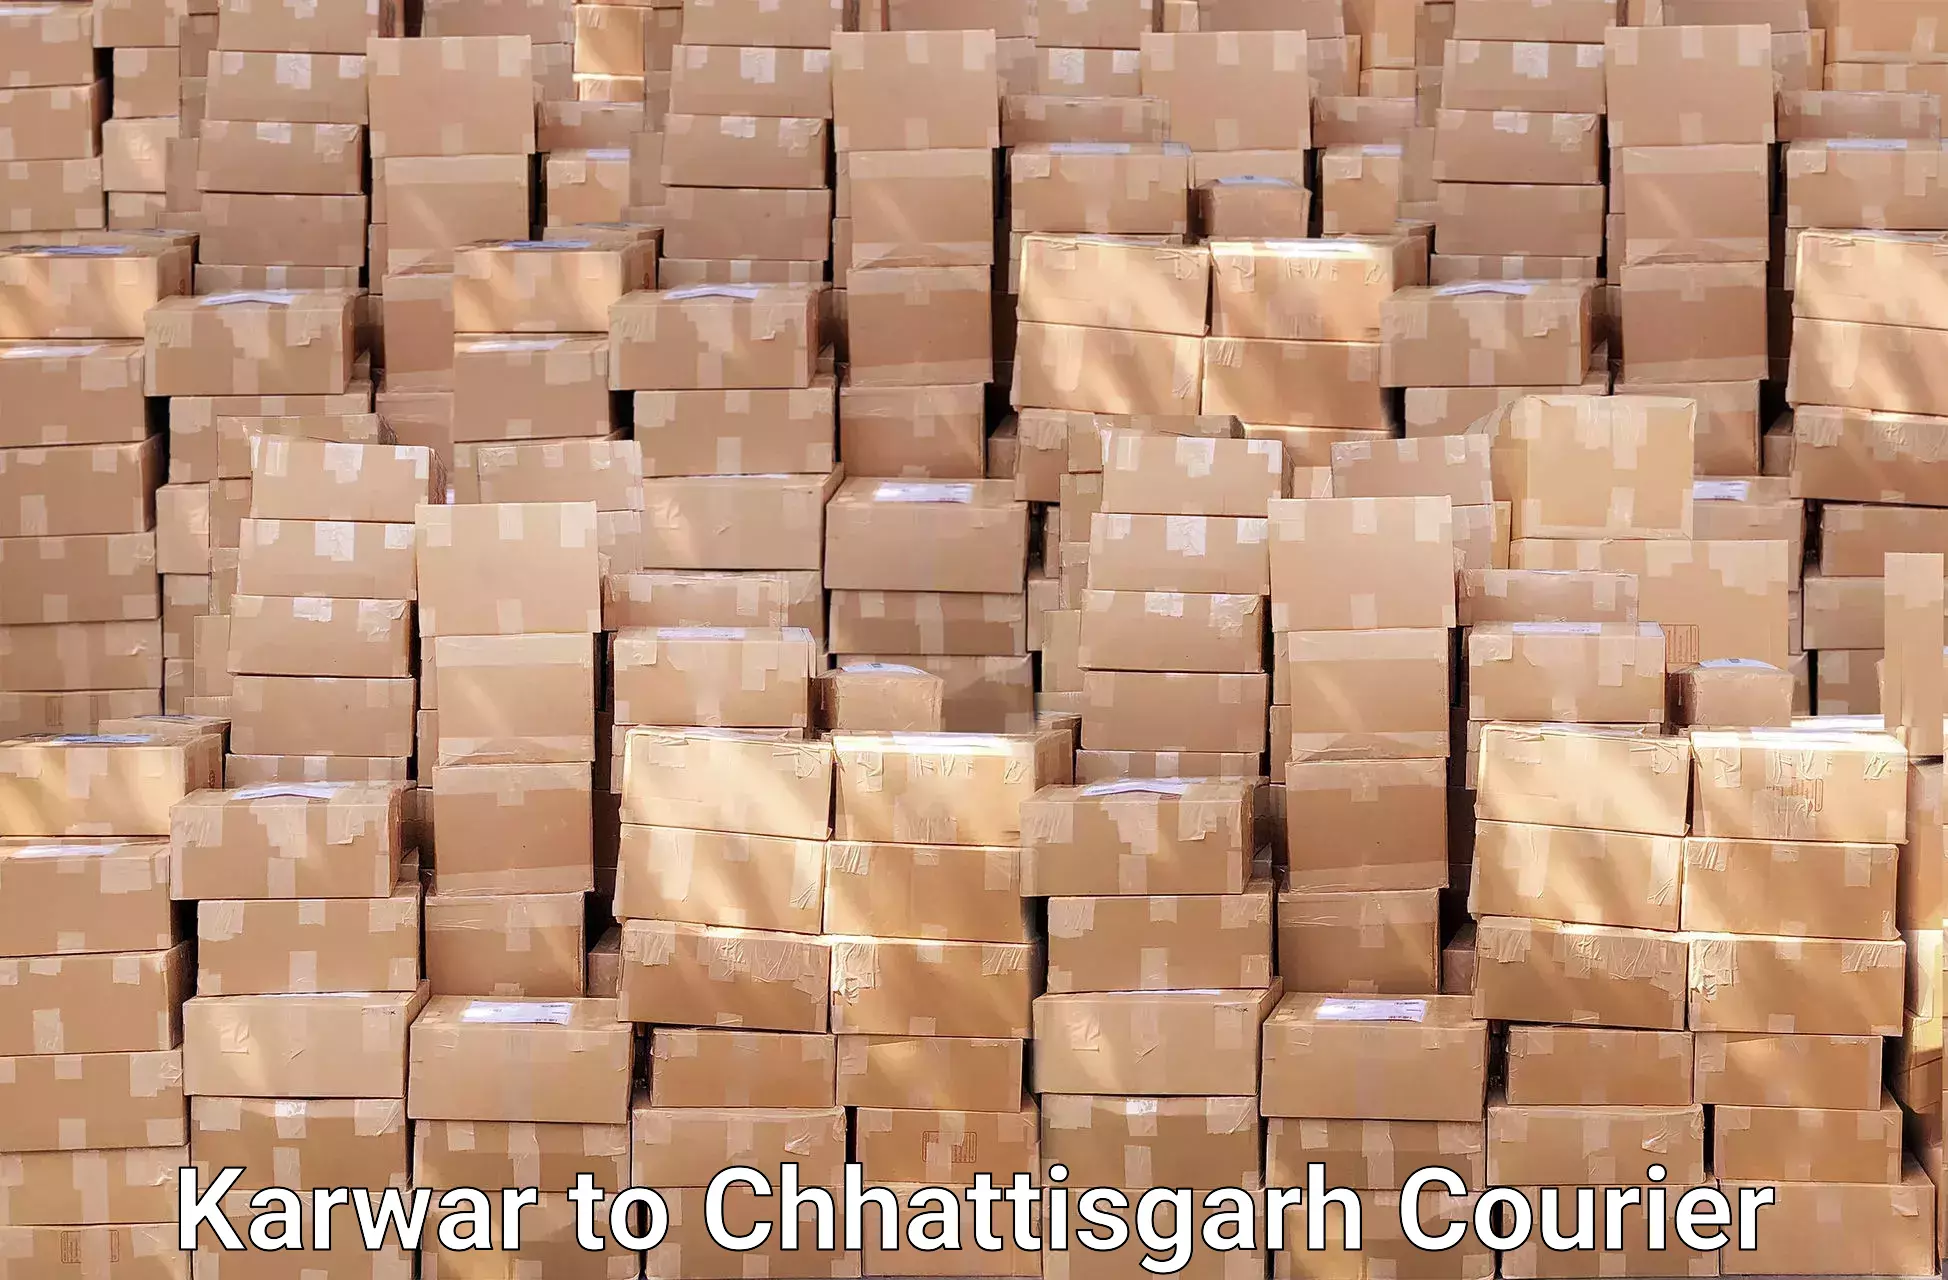 Moving and packing experts Karwar to Chhattisgarh